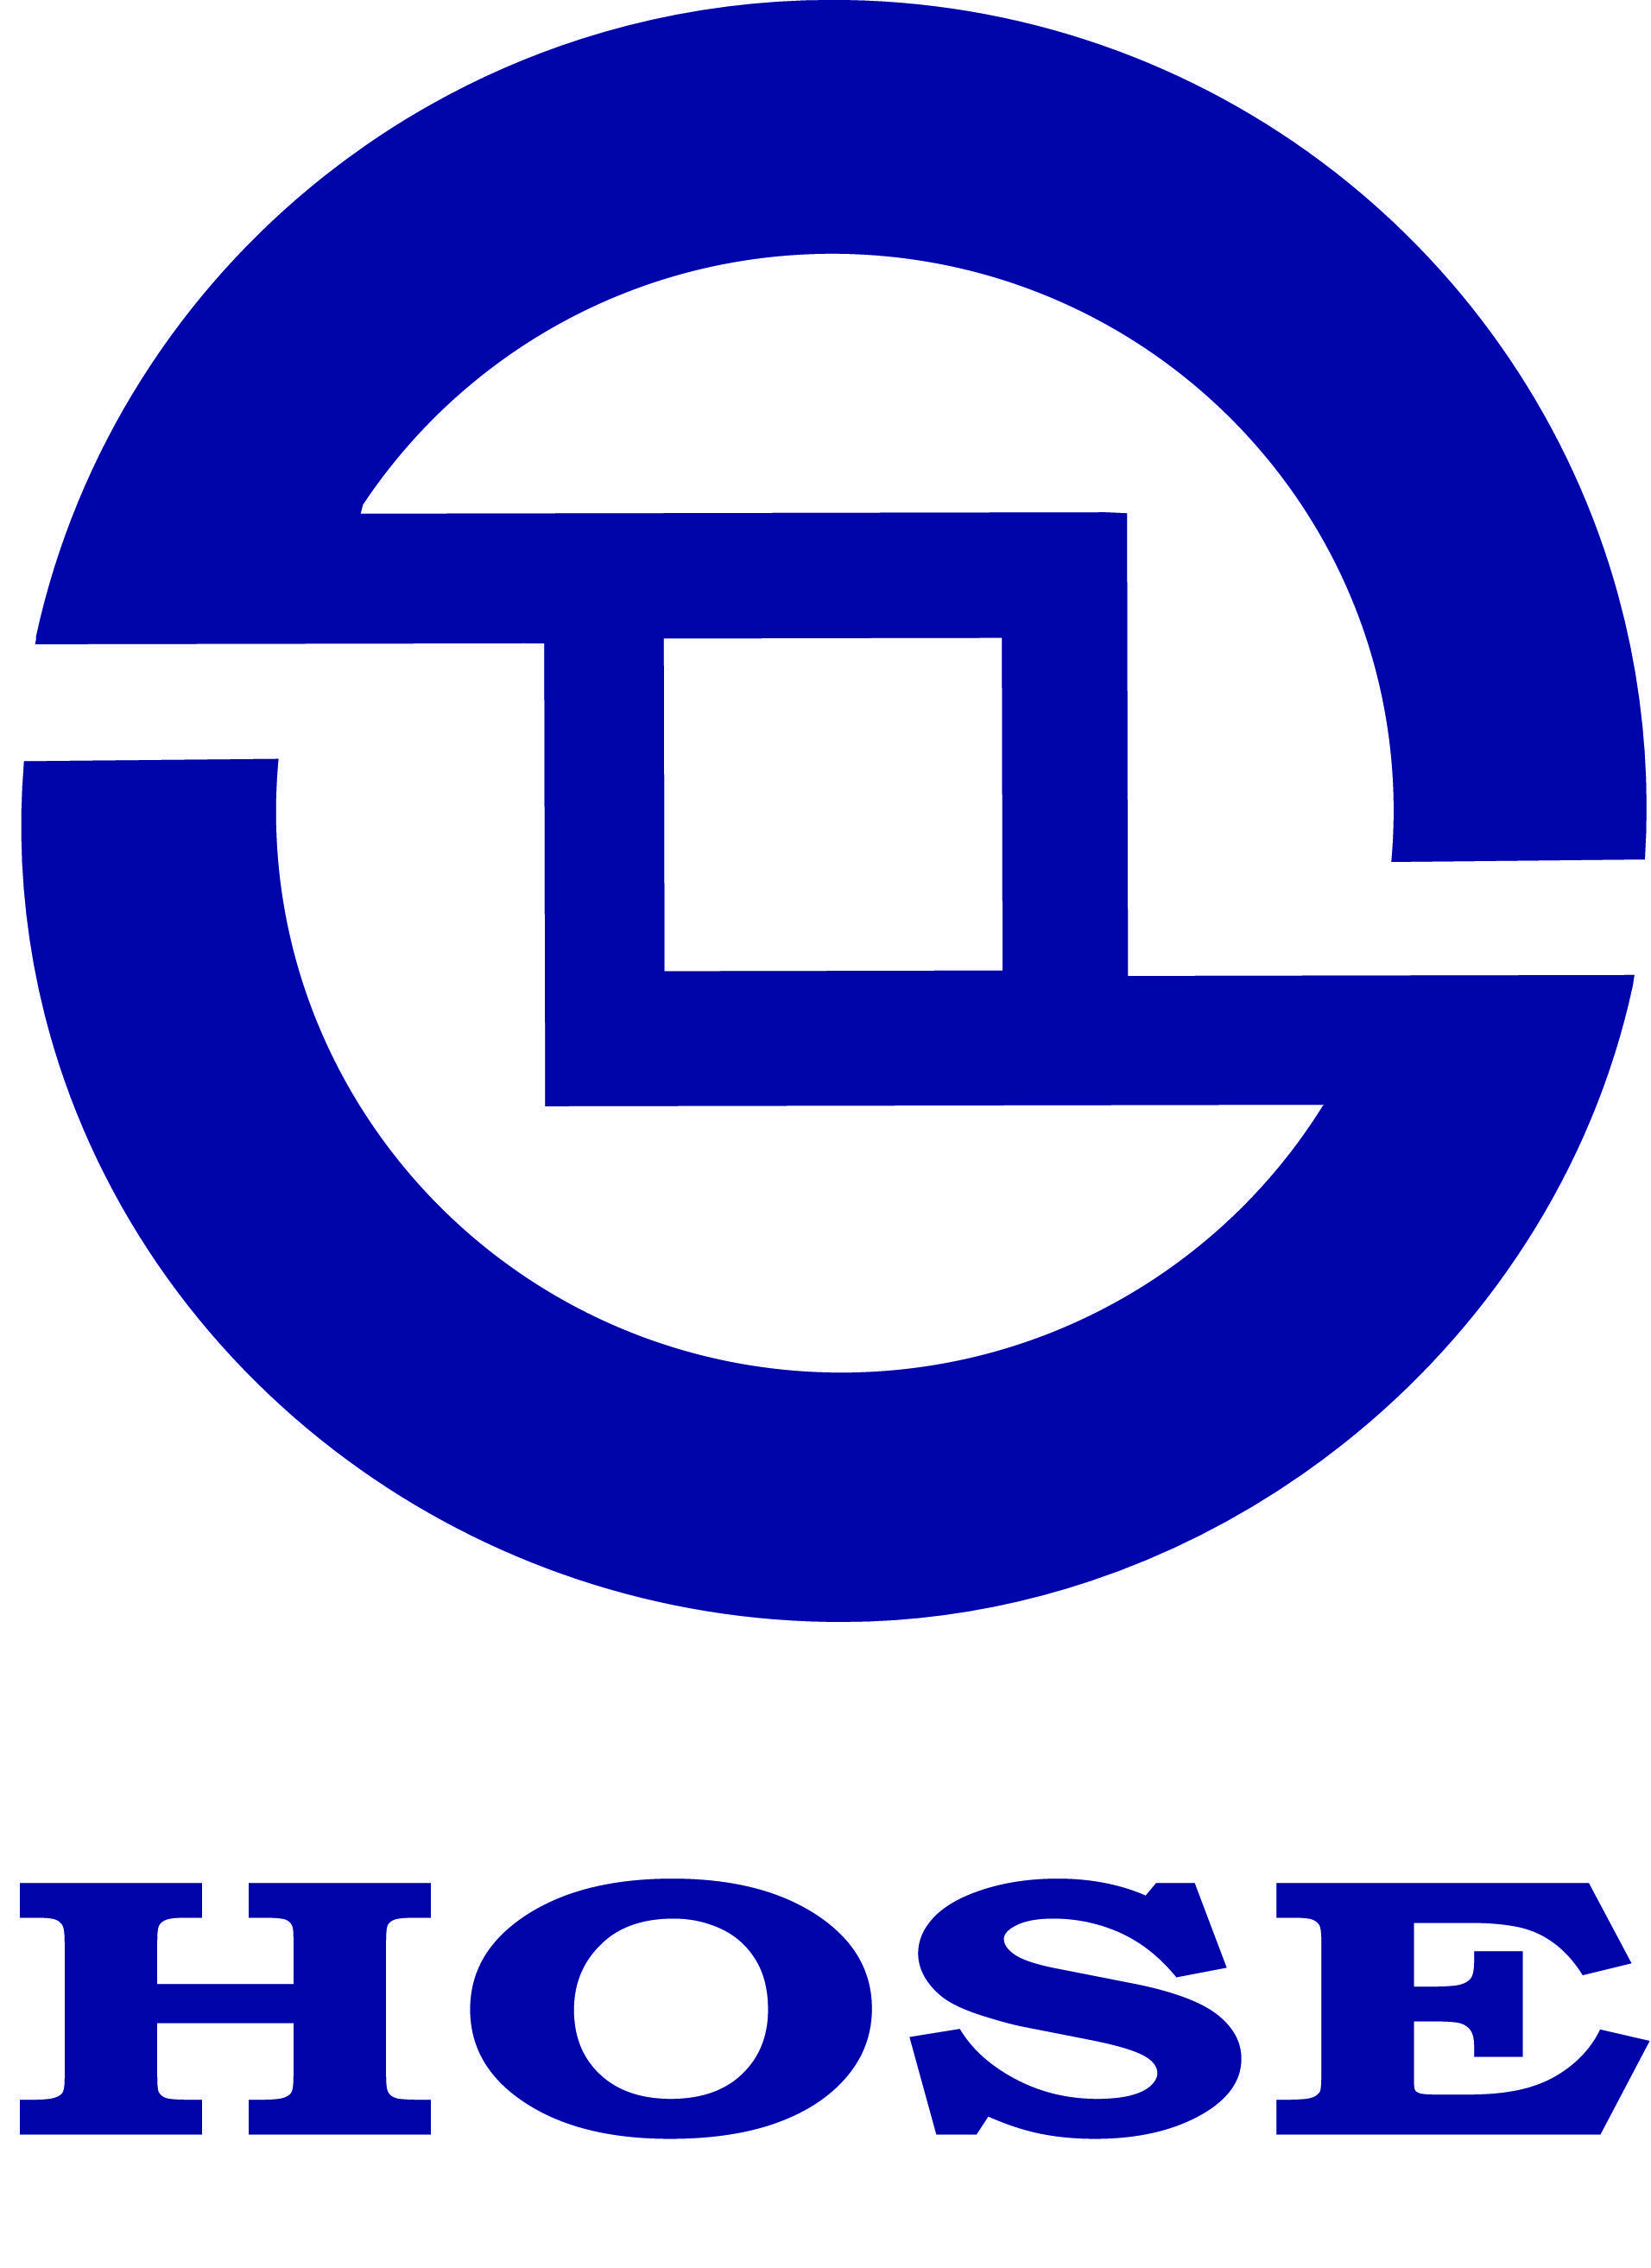 Hose Logo - File:HOSE logo.jpg - Wikimedia Commons